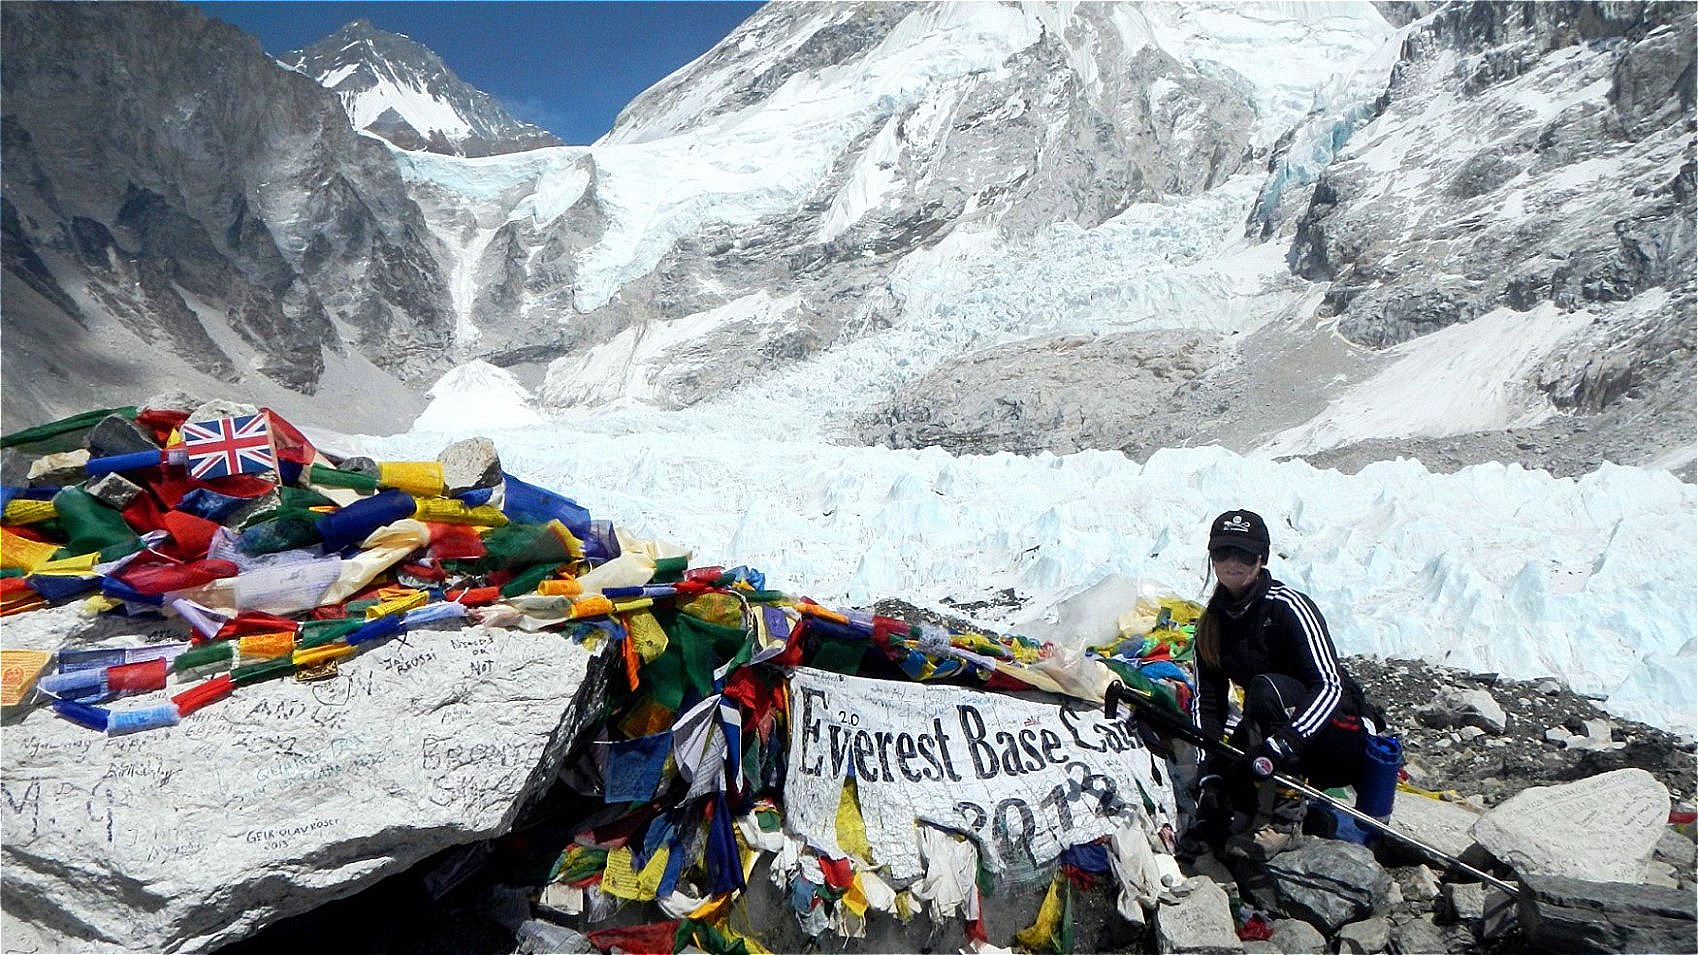 Everest South Base Camp -  5.364 m Nepal - April 2013